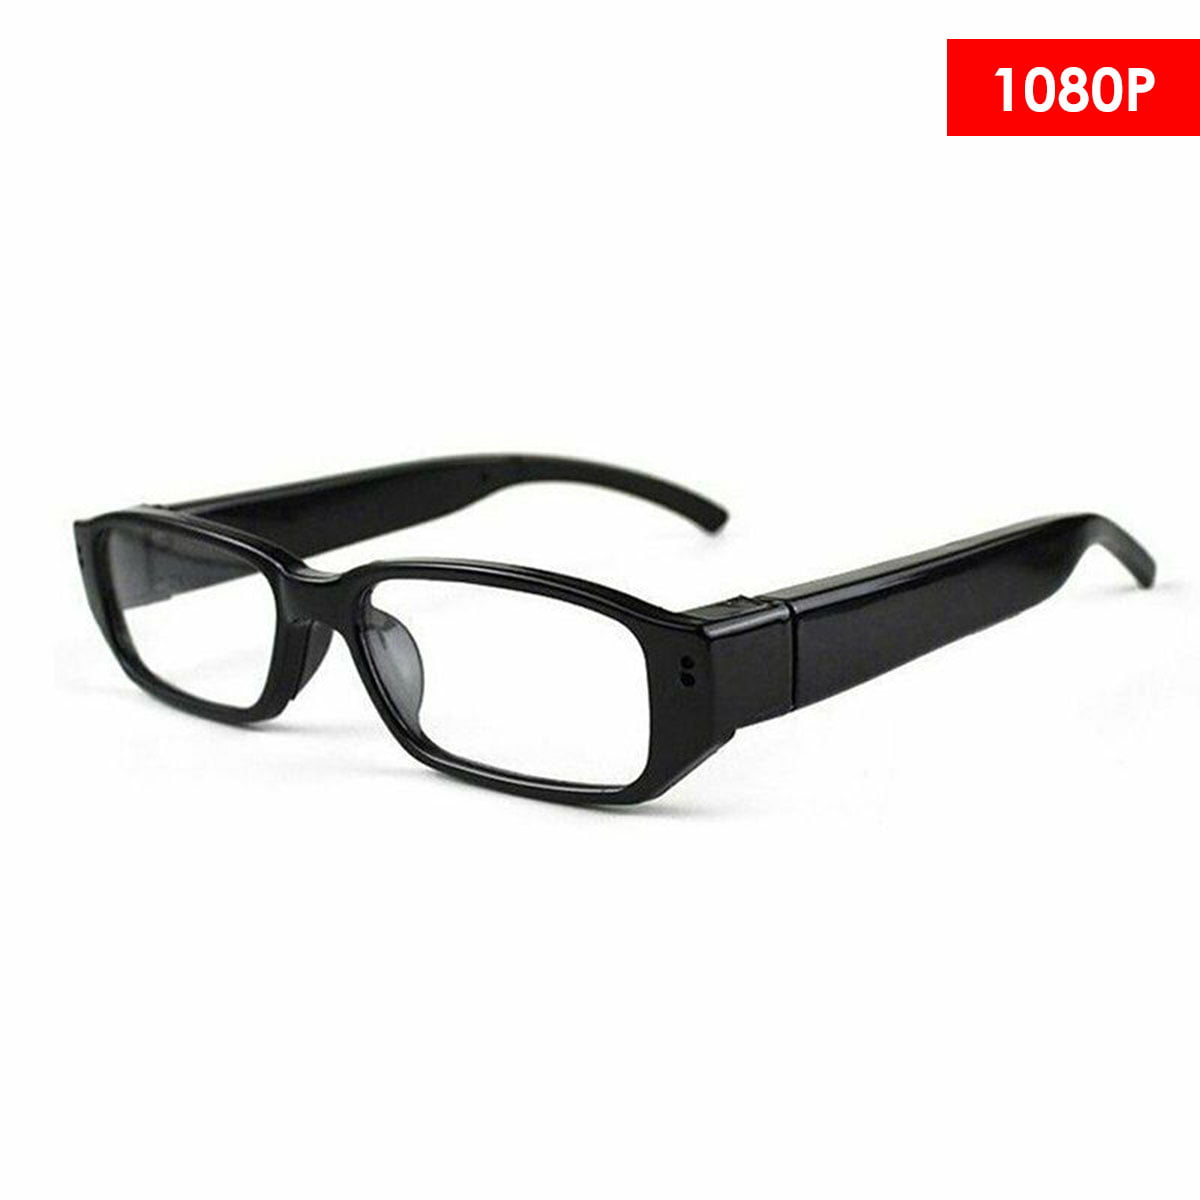 Monkaim Spy Glasses HD 1080P Camera Glasses Hidden Spy Cameras Convert Video Rec 